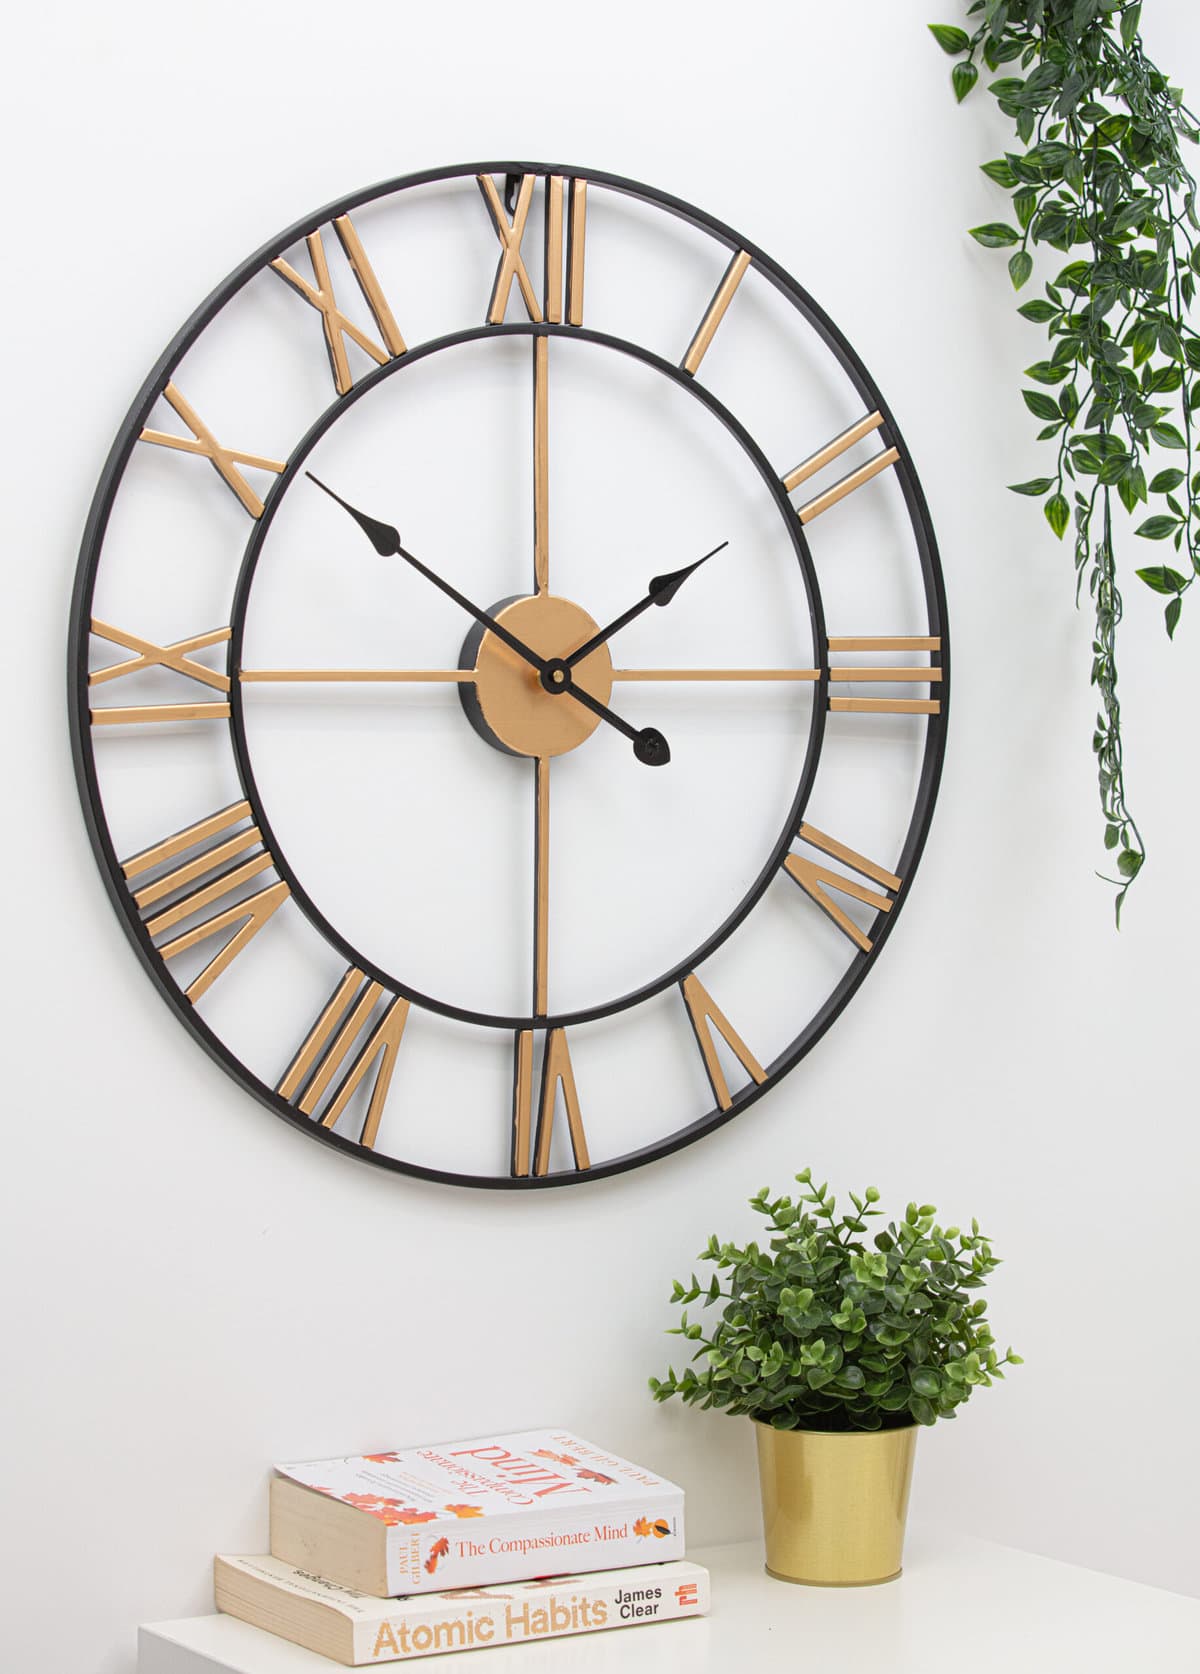 Luxury Wall Clock Grand 35x66cm – Opulent Grey & Gold Finish, A